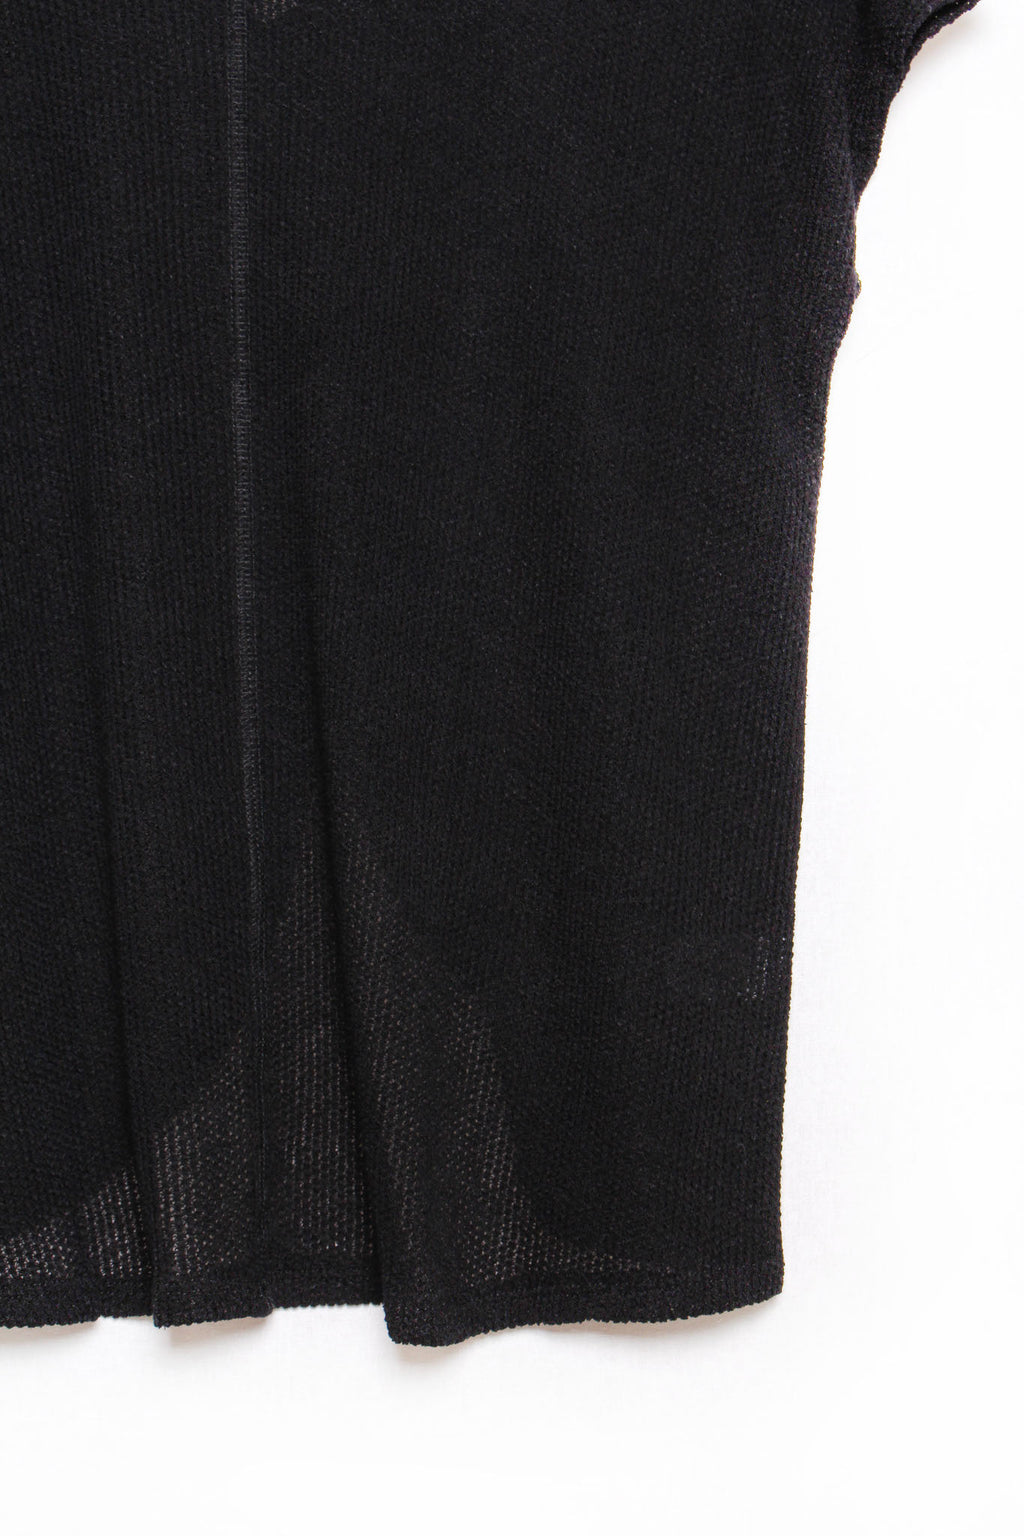 Women's Short Sleeve Twist Back Knitted Top